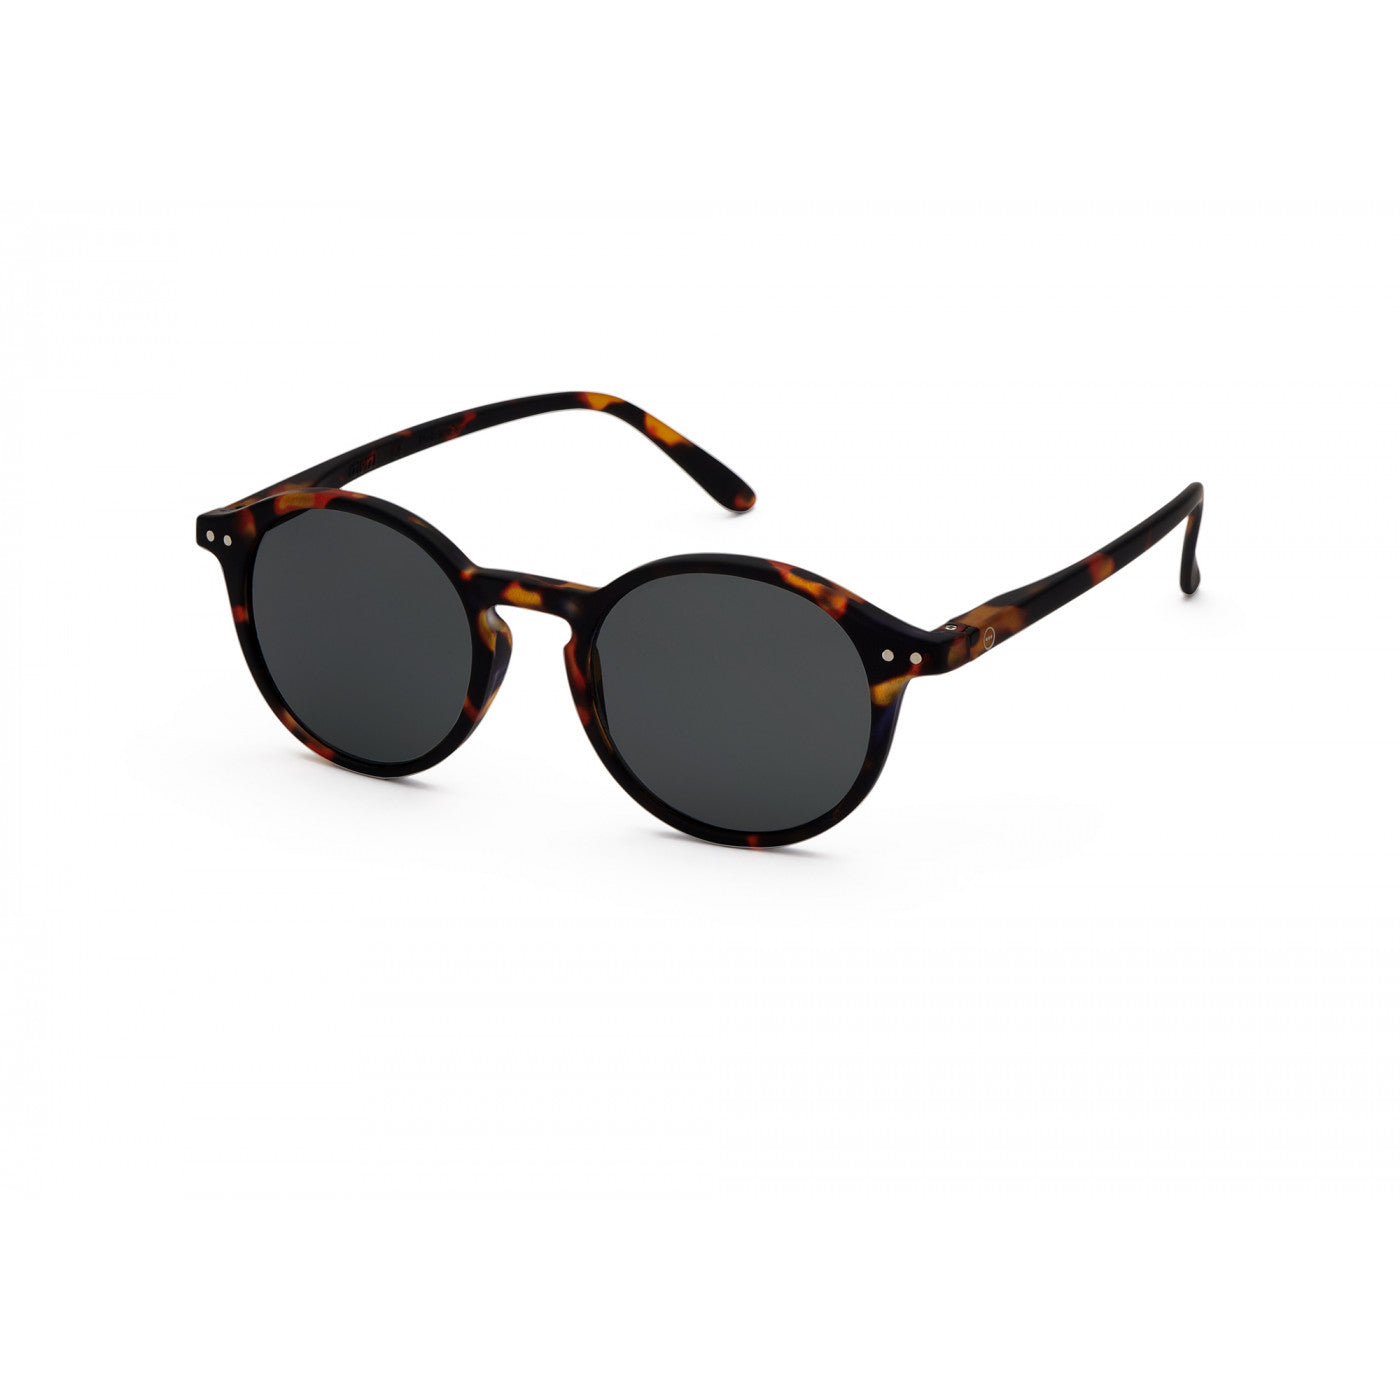 Unisex Sunglasses - Style D - Tortoise